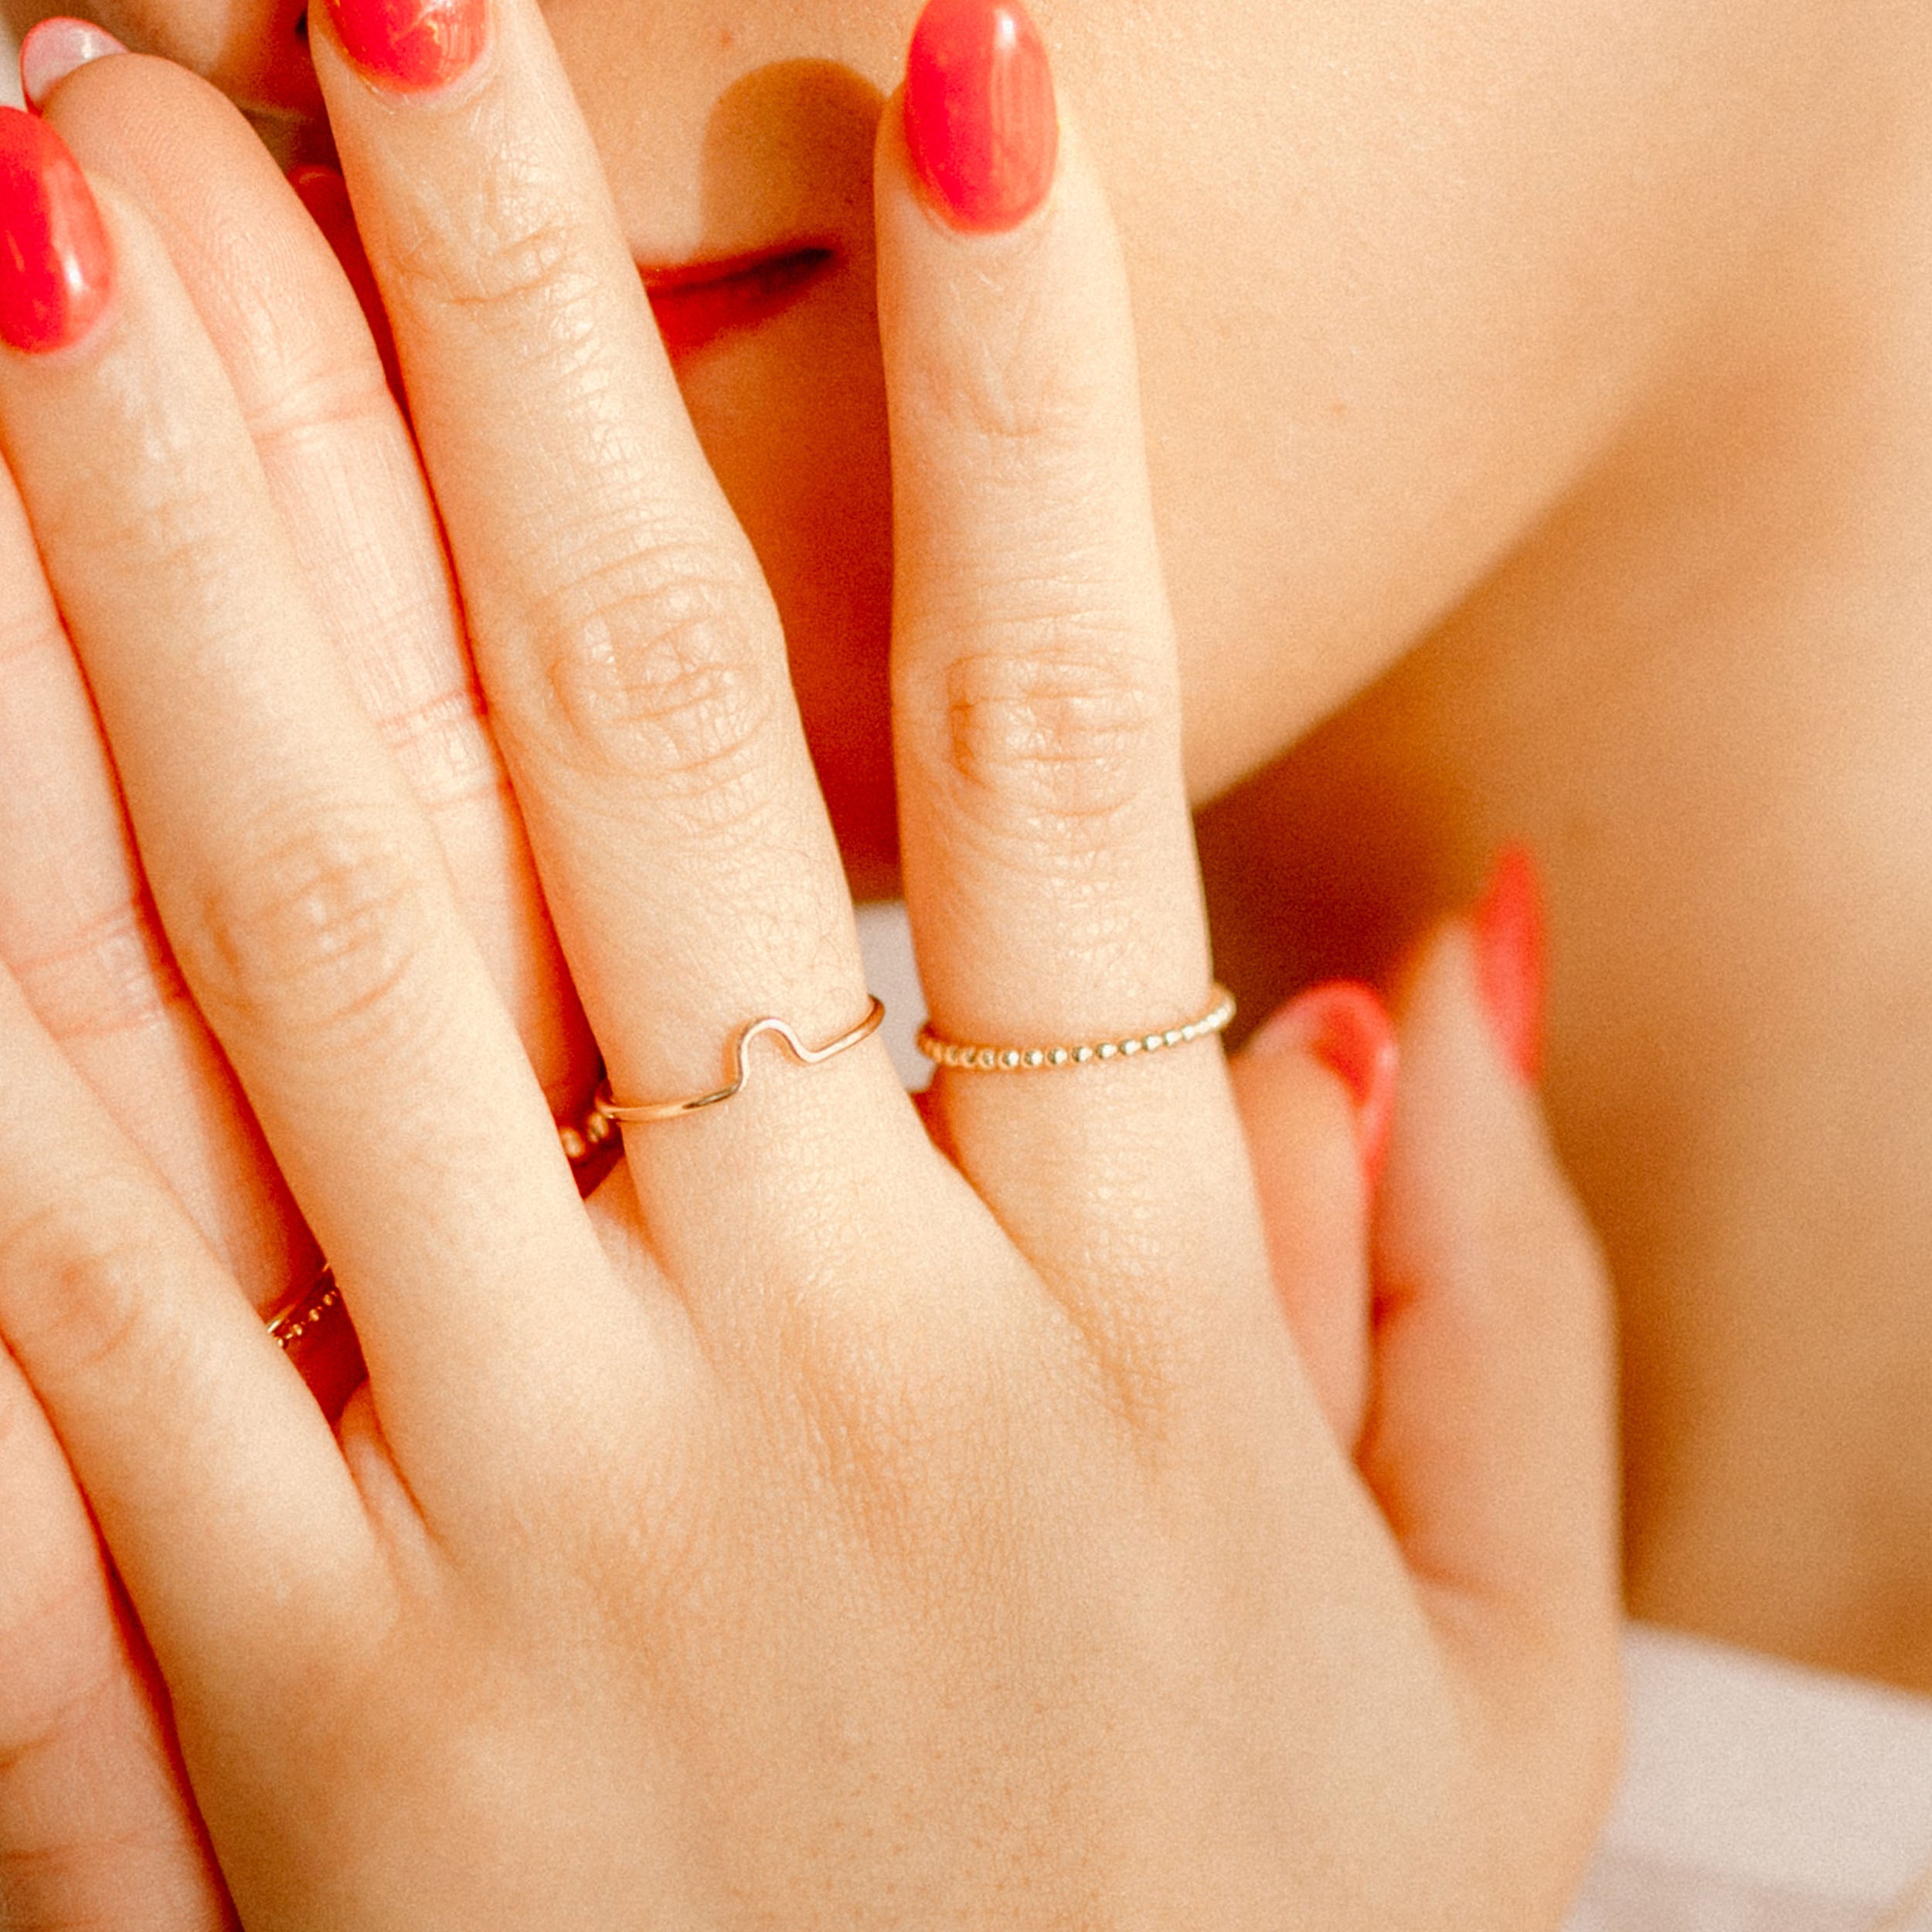 Dainty Braid Gold Ring, Minimalist Simple Ring, Minimal Ring, Tiny